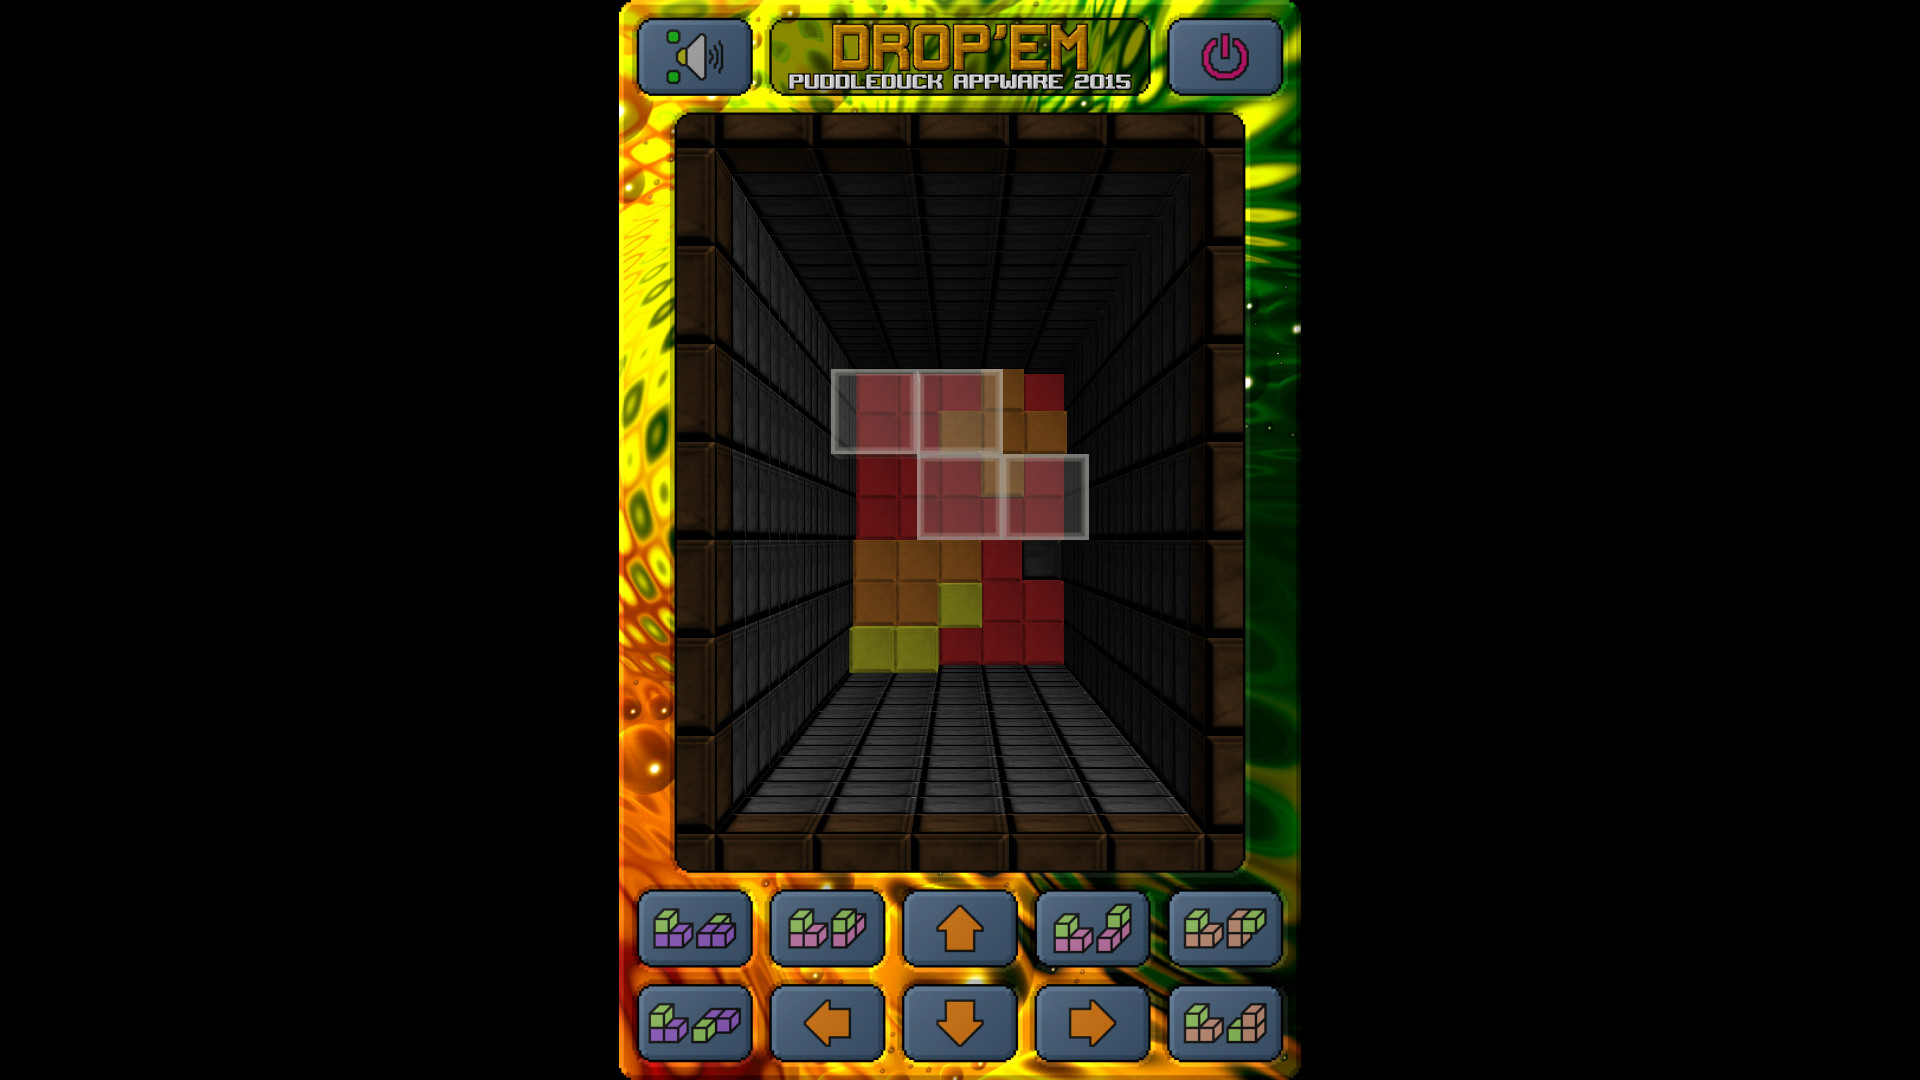 AppGameKit Classic - Games Pack 2 screenshot